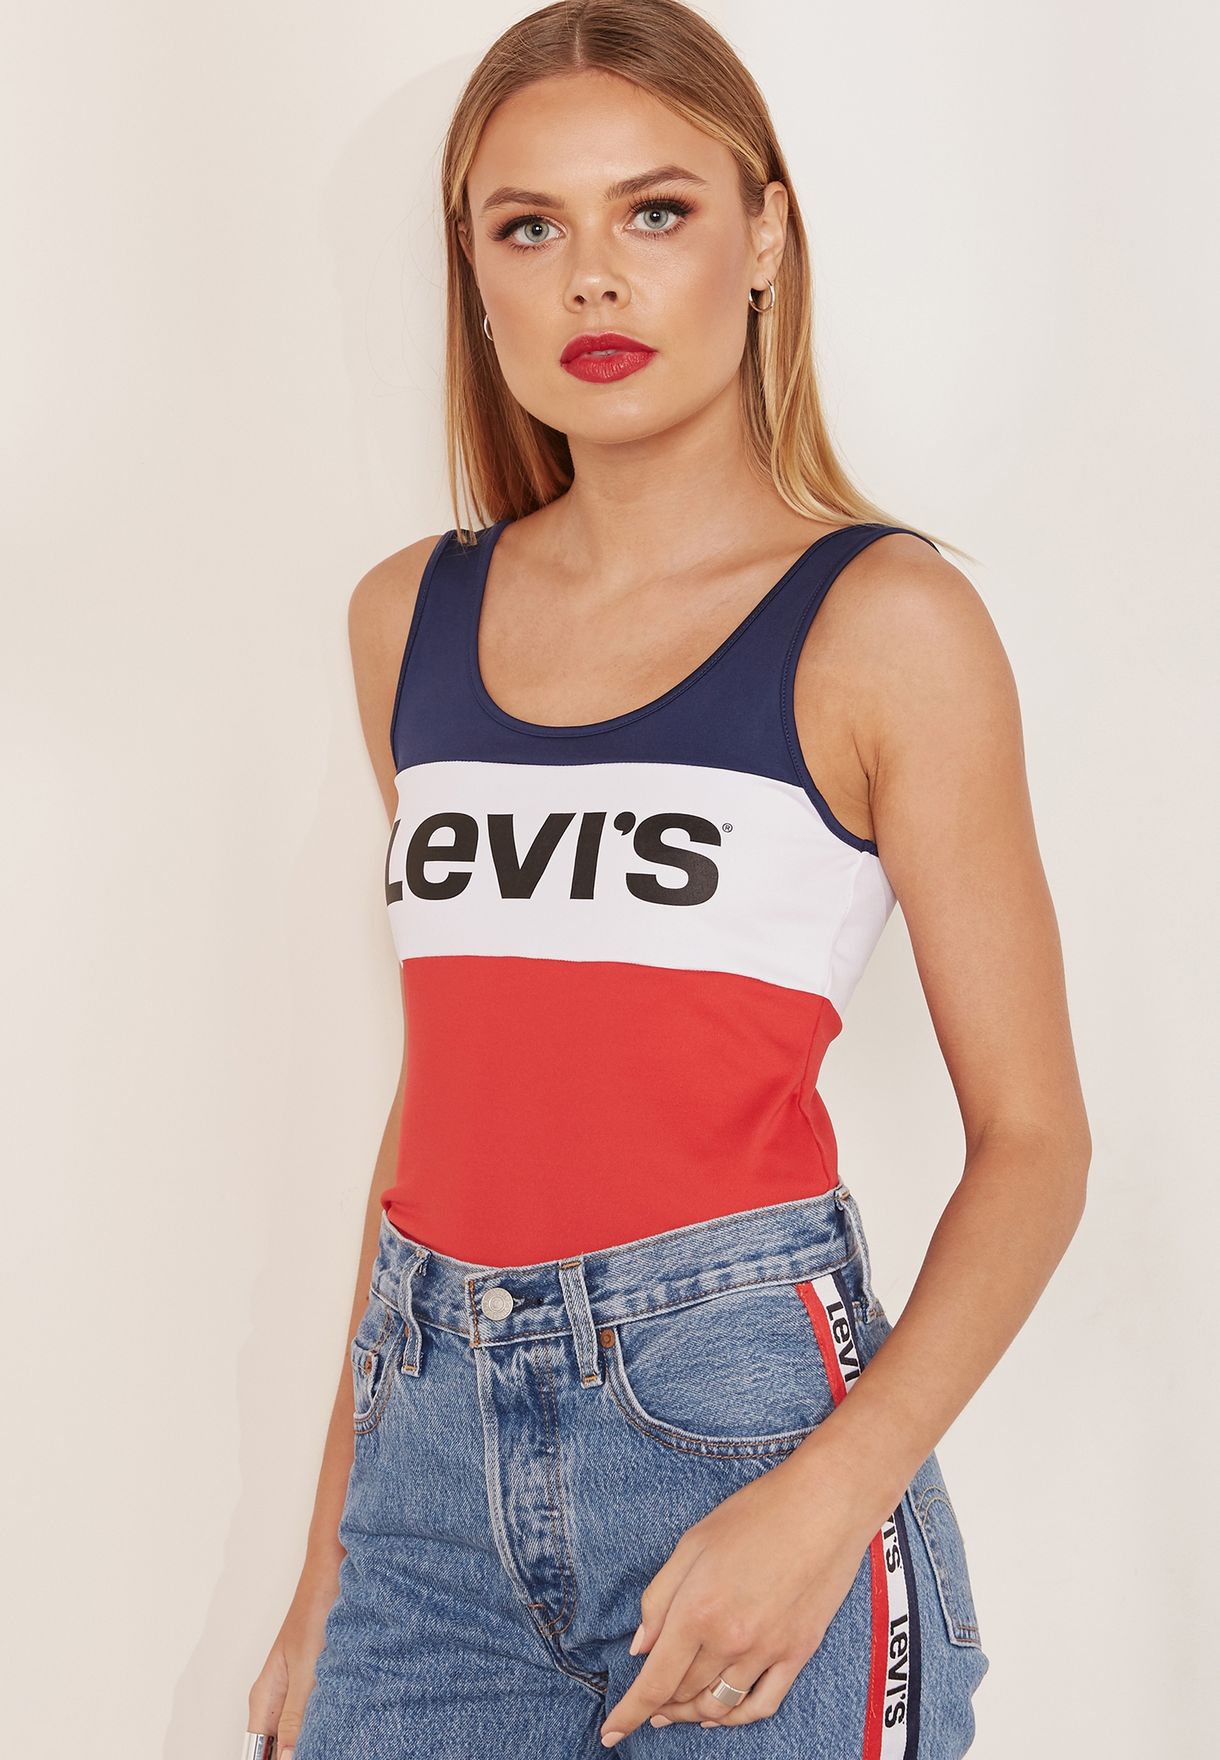 levi's sleeveless shirt